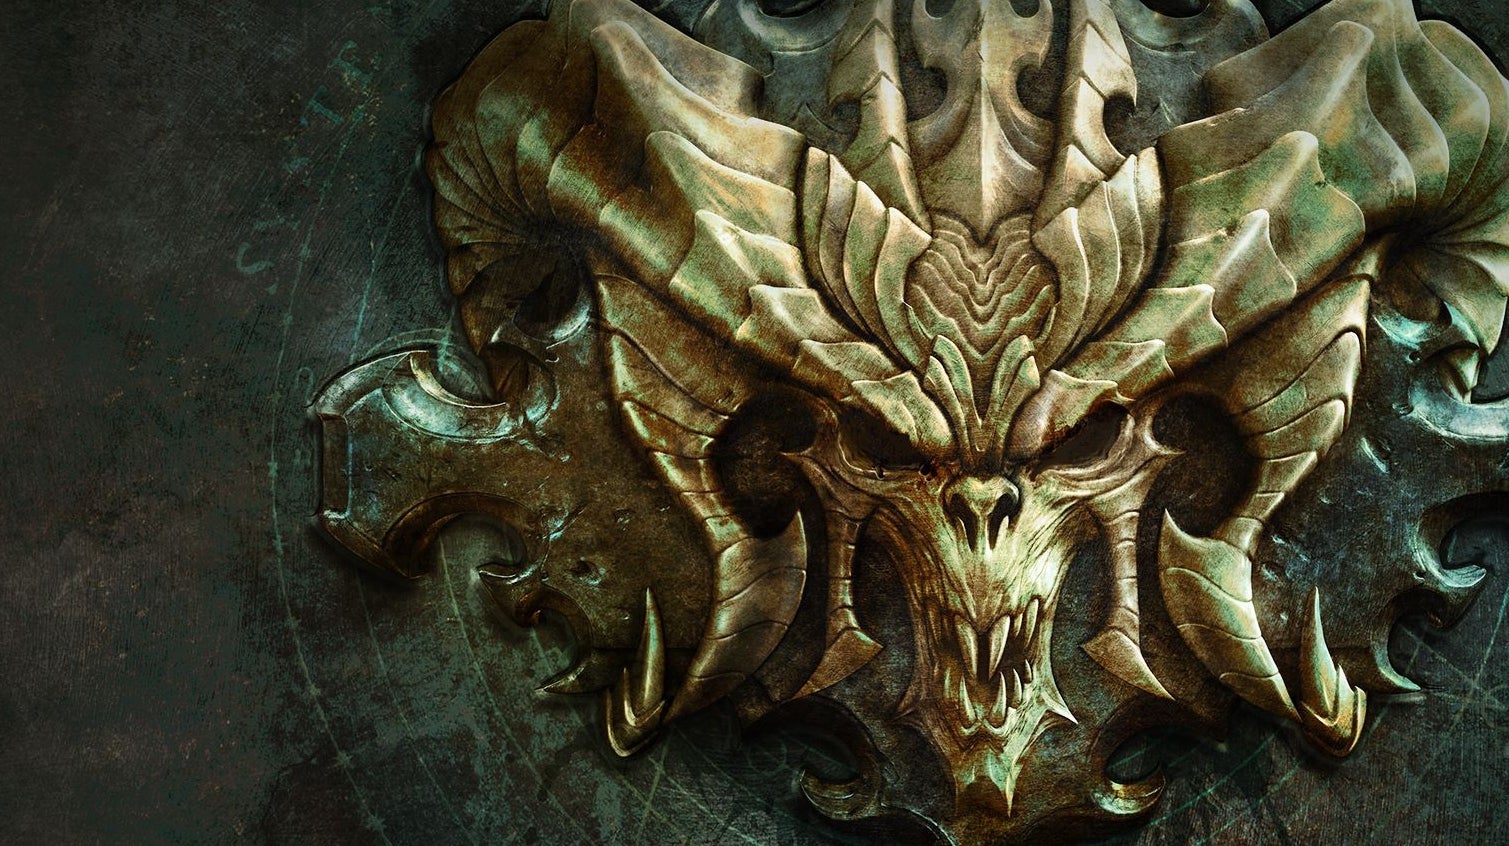 Obrazki dla BlizzCon bez Diablo 4 - sugeruje Blizzard